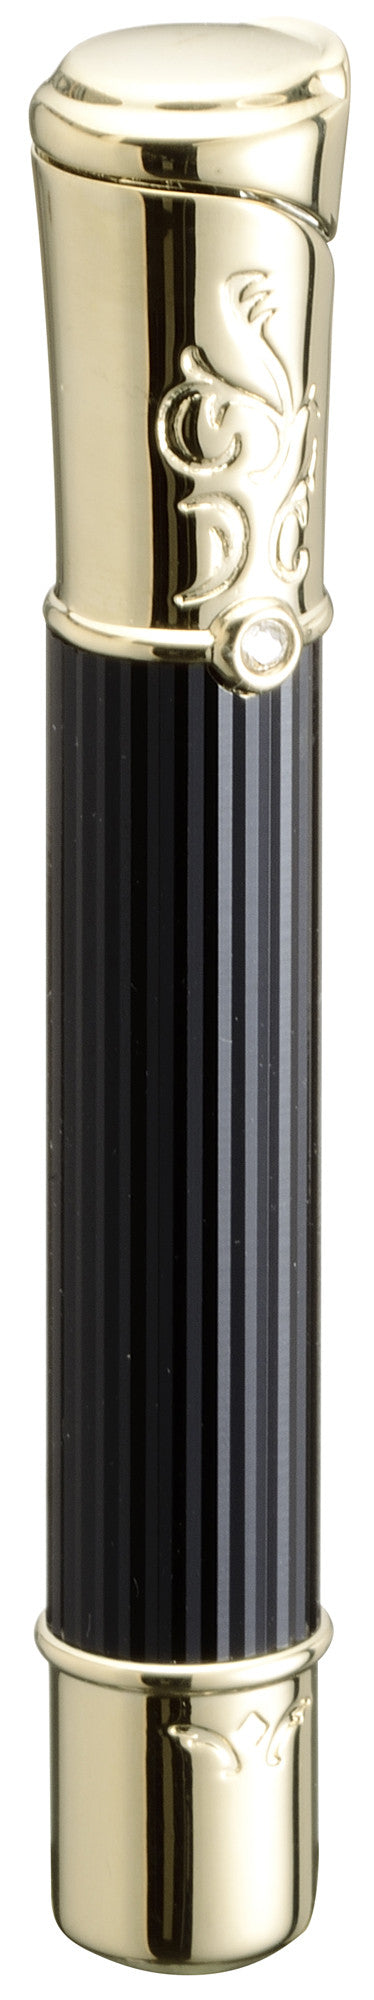 Sarome Piezo Electronic Lighter SK151-06 Black/Champagne gold 0.2μ